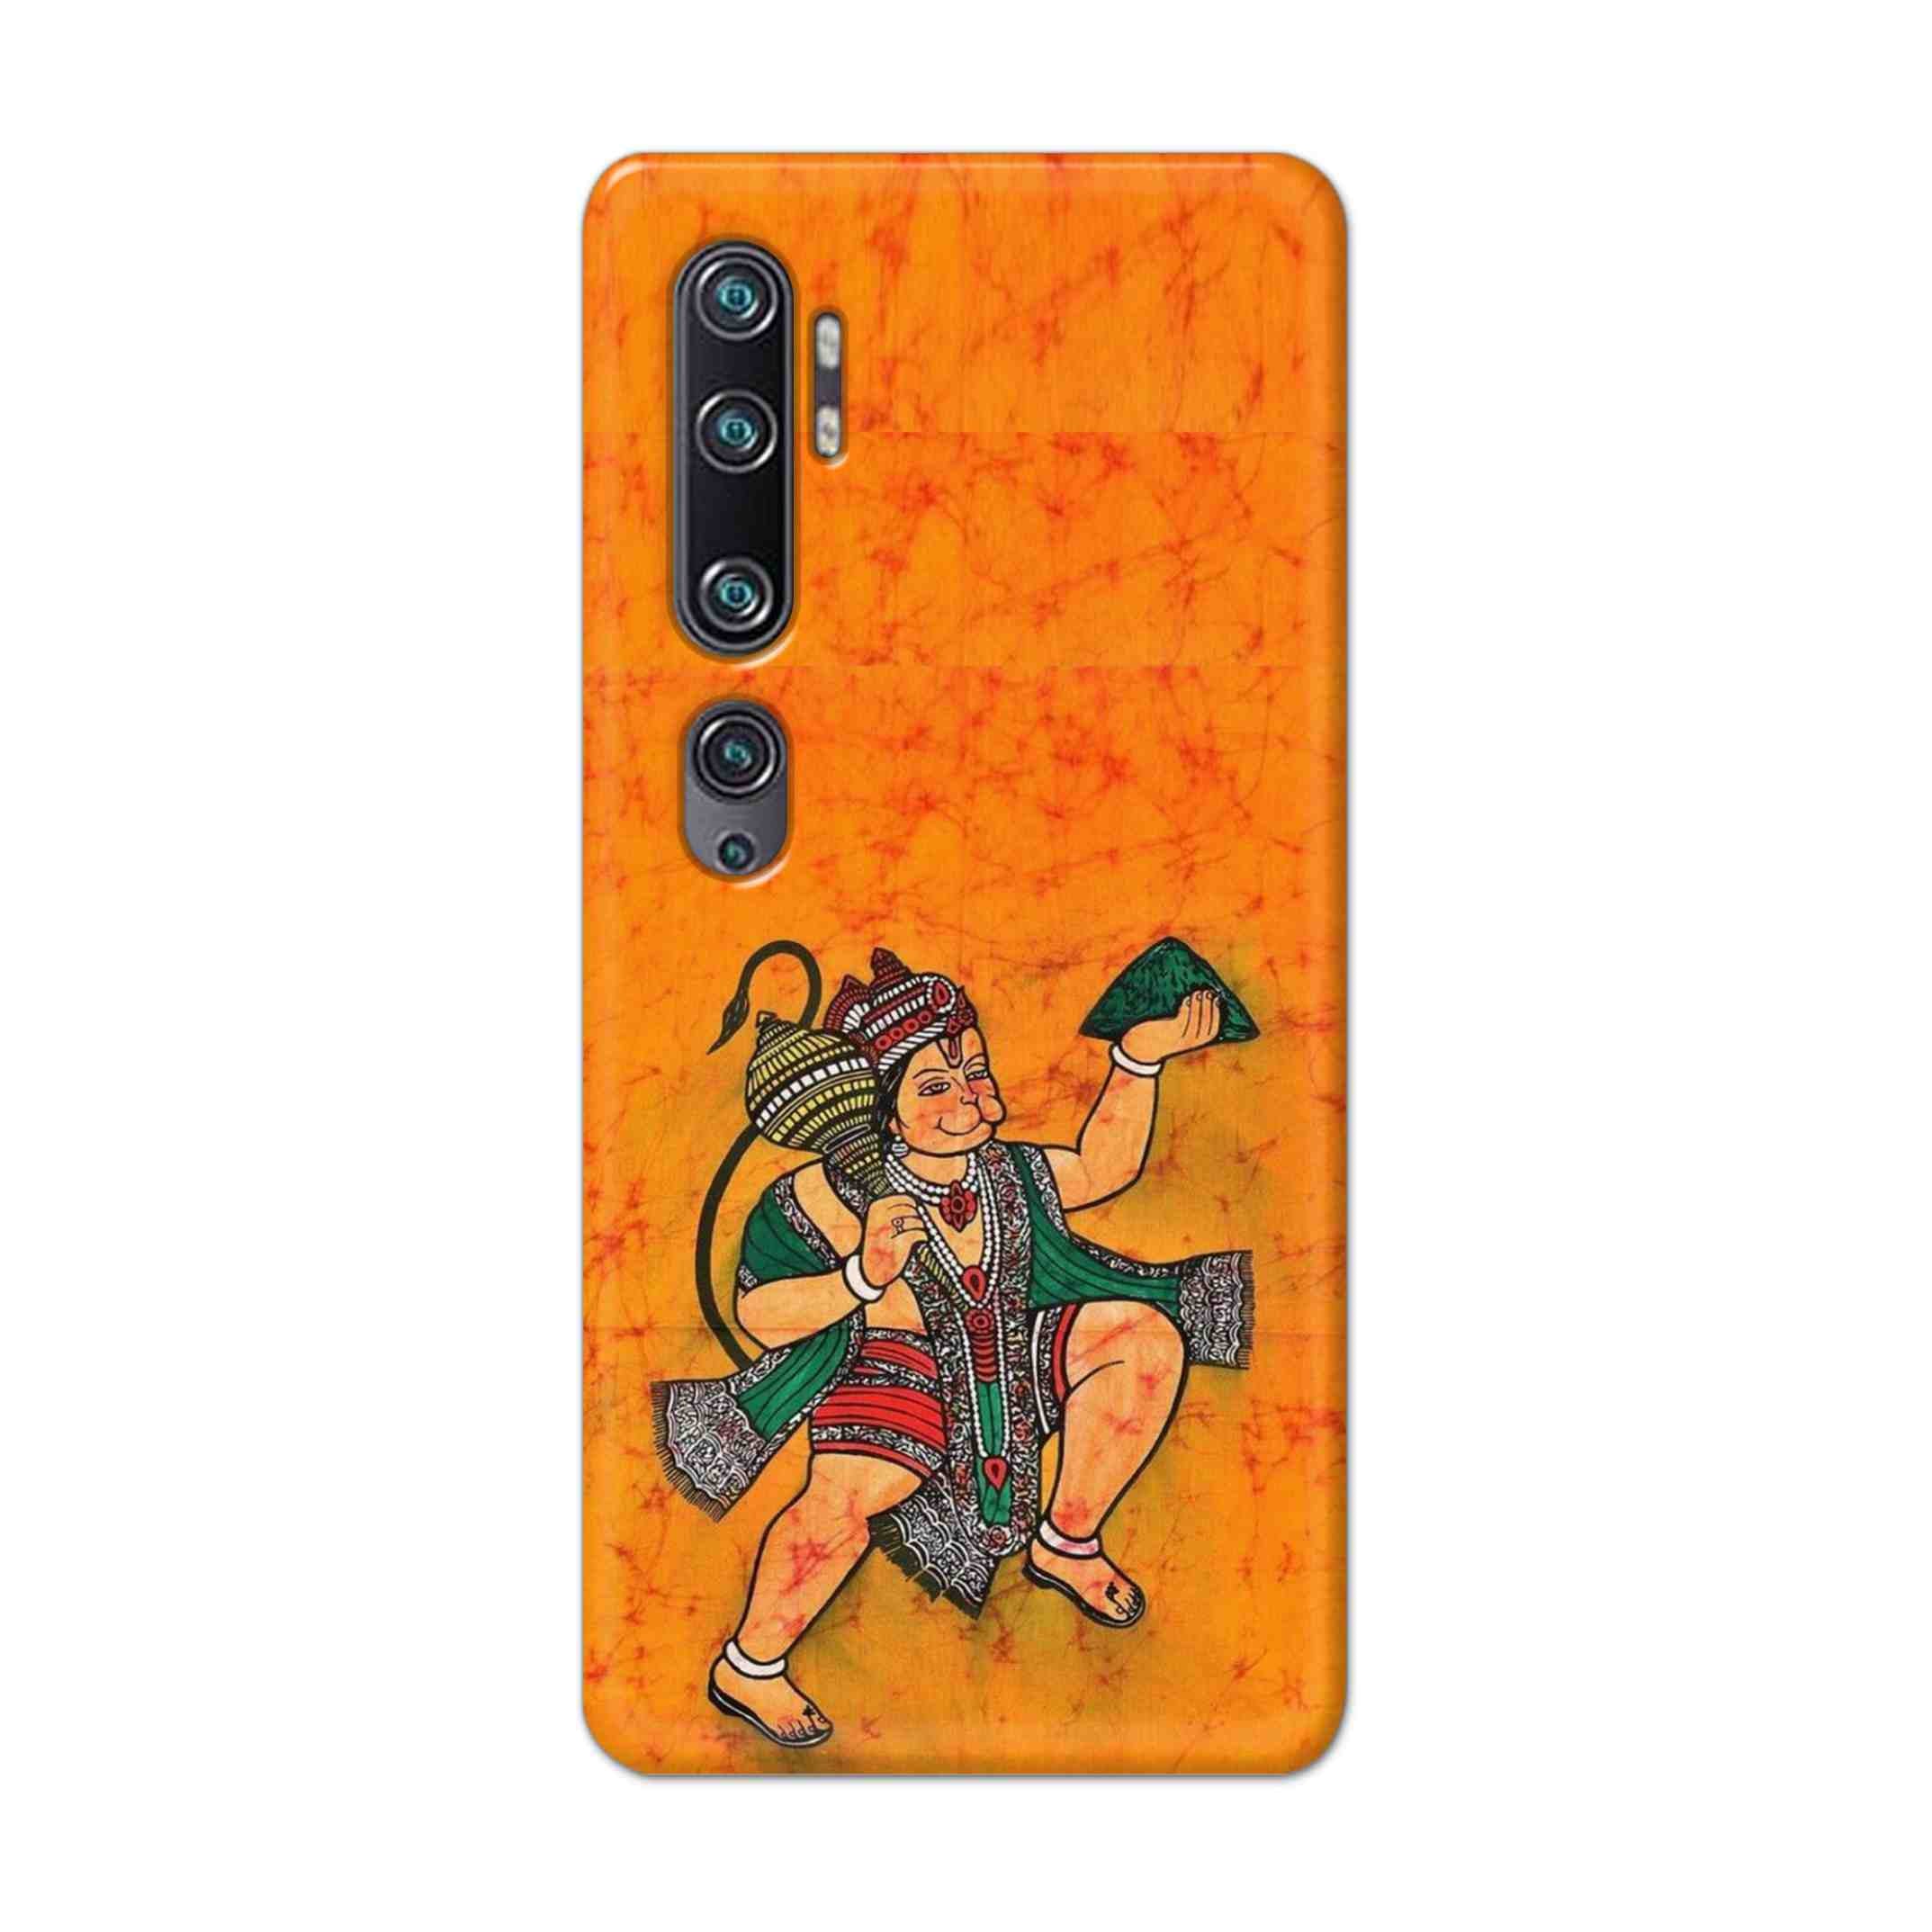 Buy Hanuman Ji Hard Back Mobile Phone Case Cover For Xiaomi Mi Note 10 Pro Online